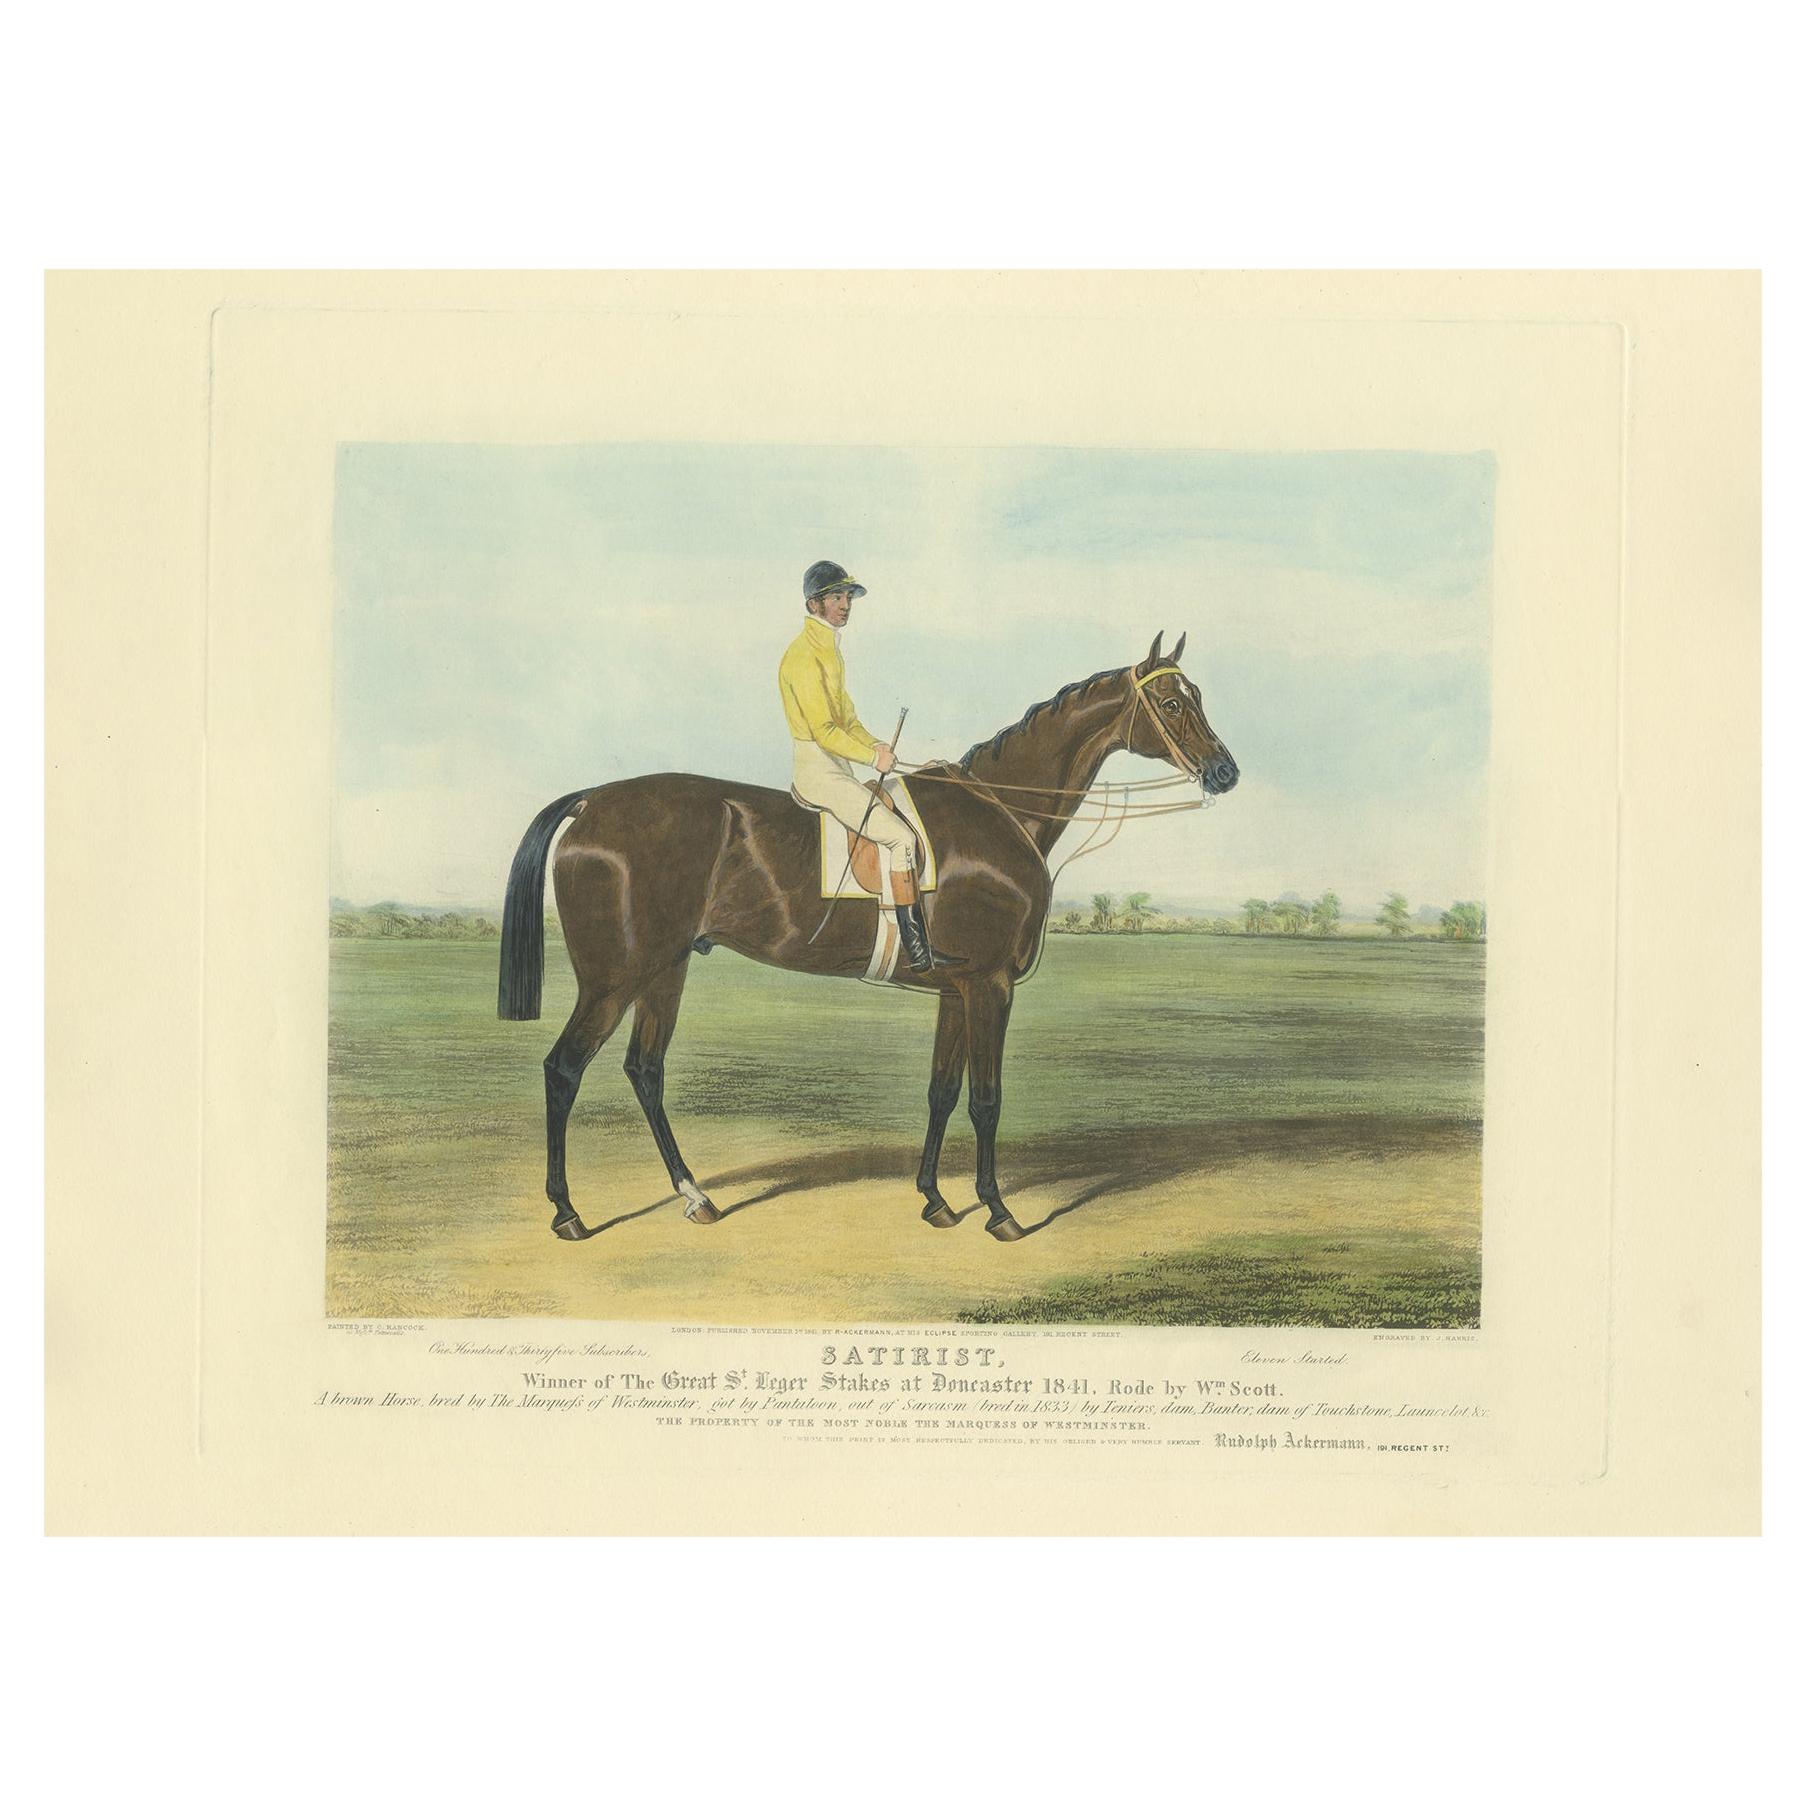 Antique Print of the Winning Horse 'Satirist' and a Jockey '1841'